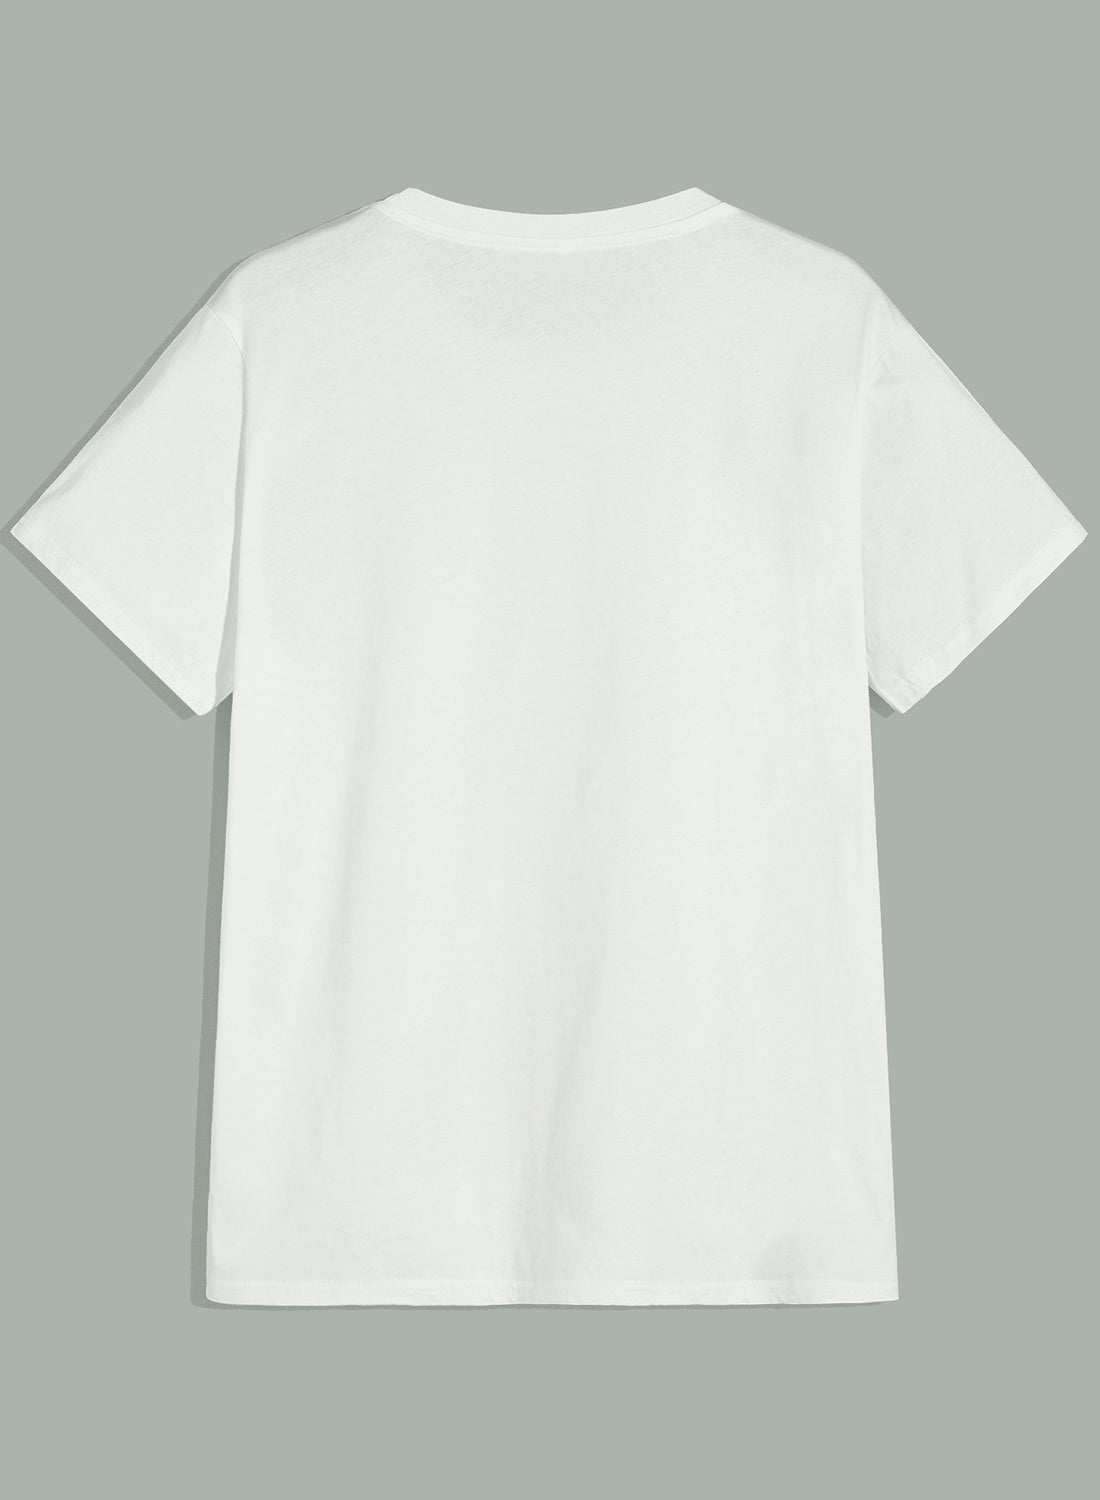 White Women's T-shirts Portrait Flag T-shirts LC2527019-1